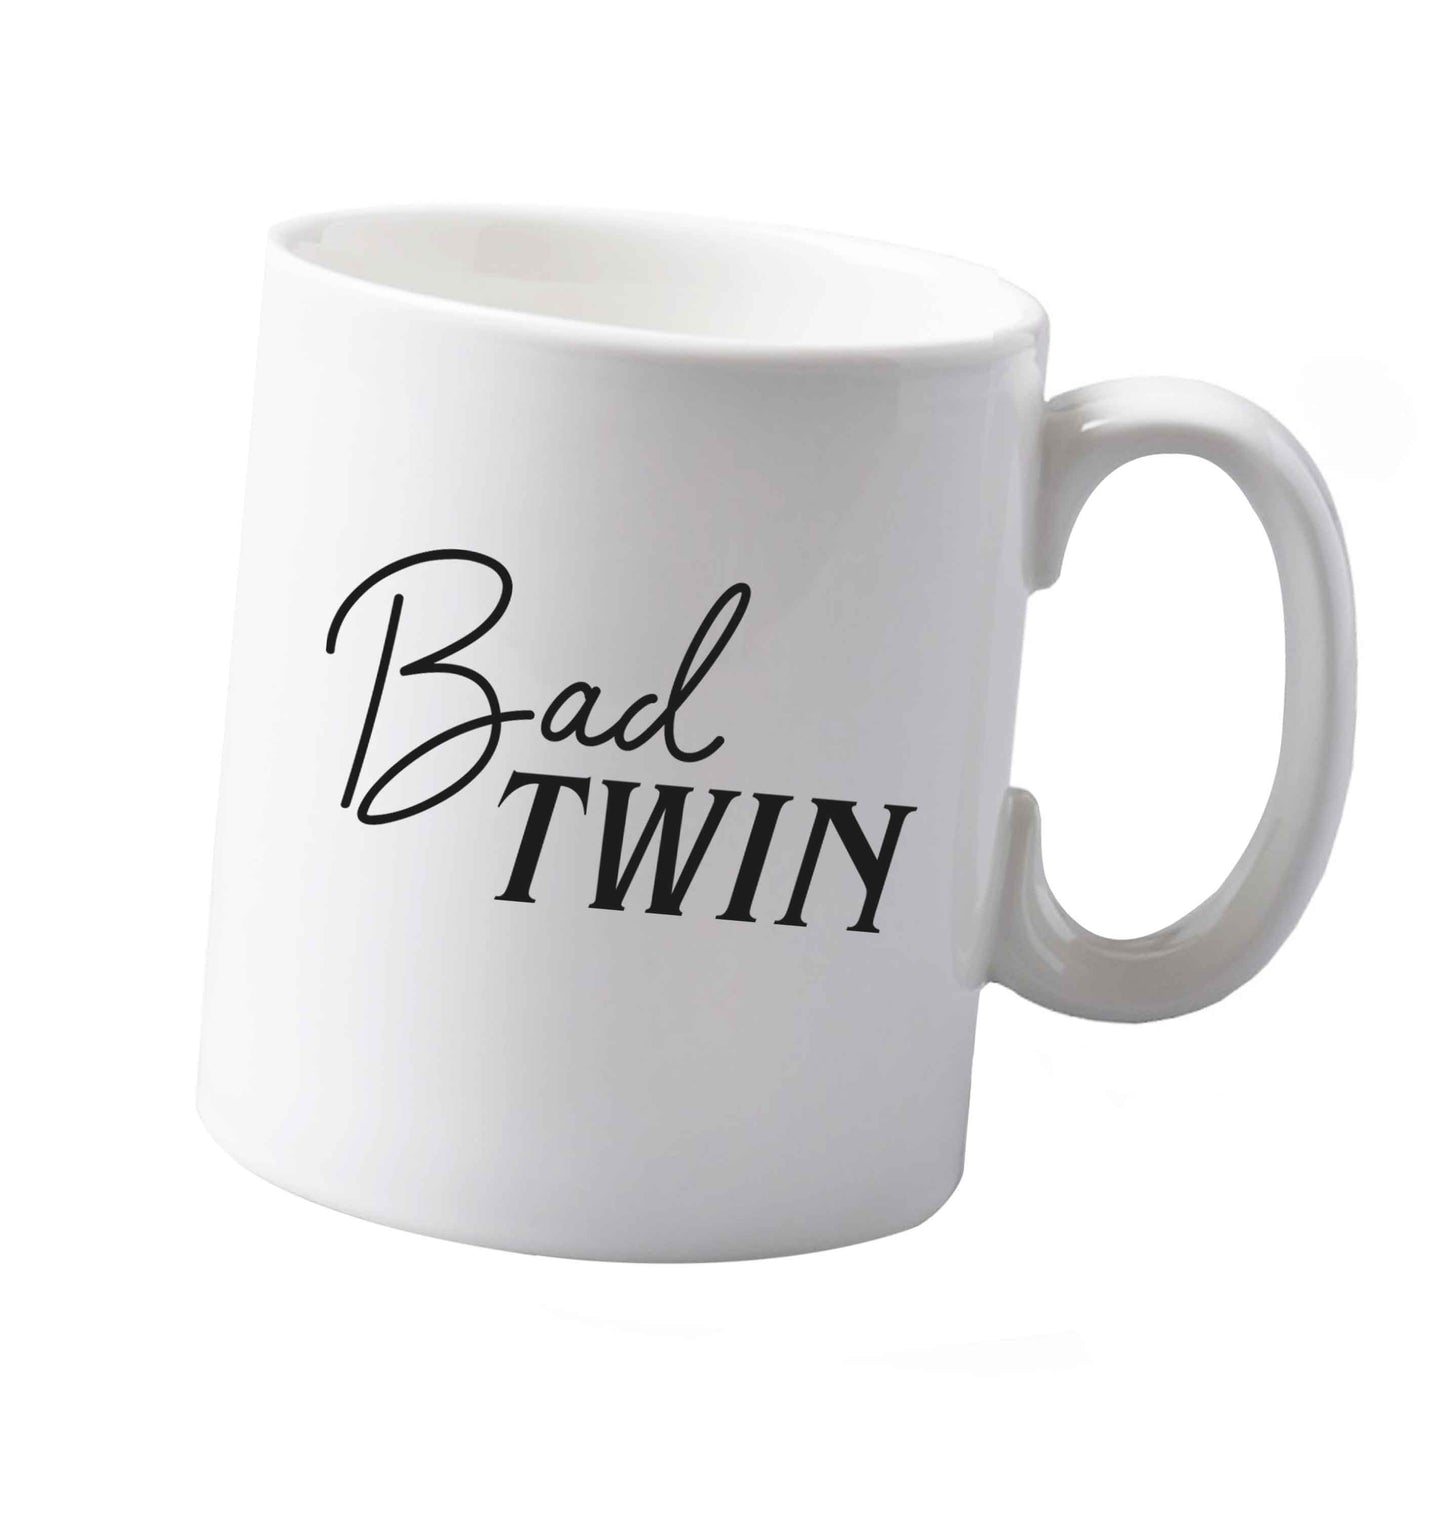 10 oz Bad twin ceramic mug both sides